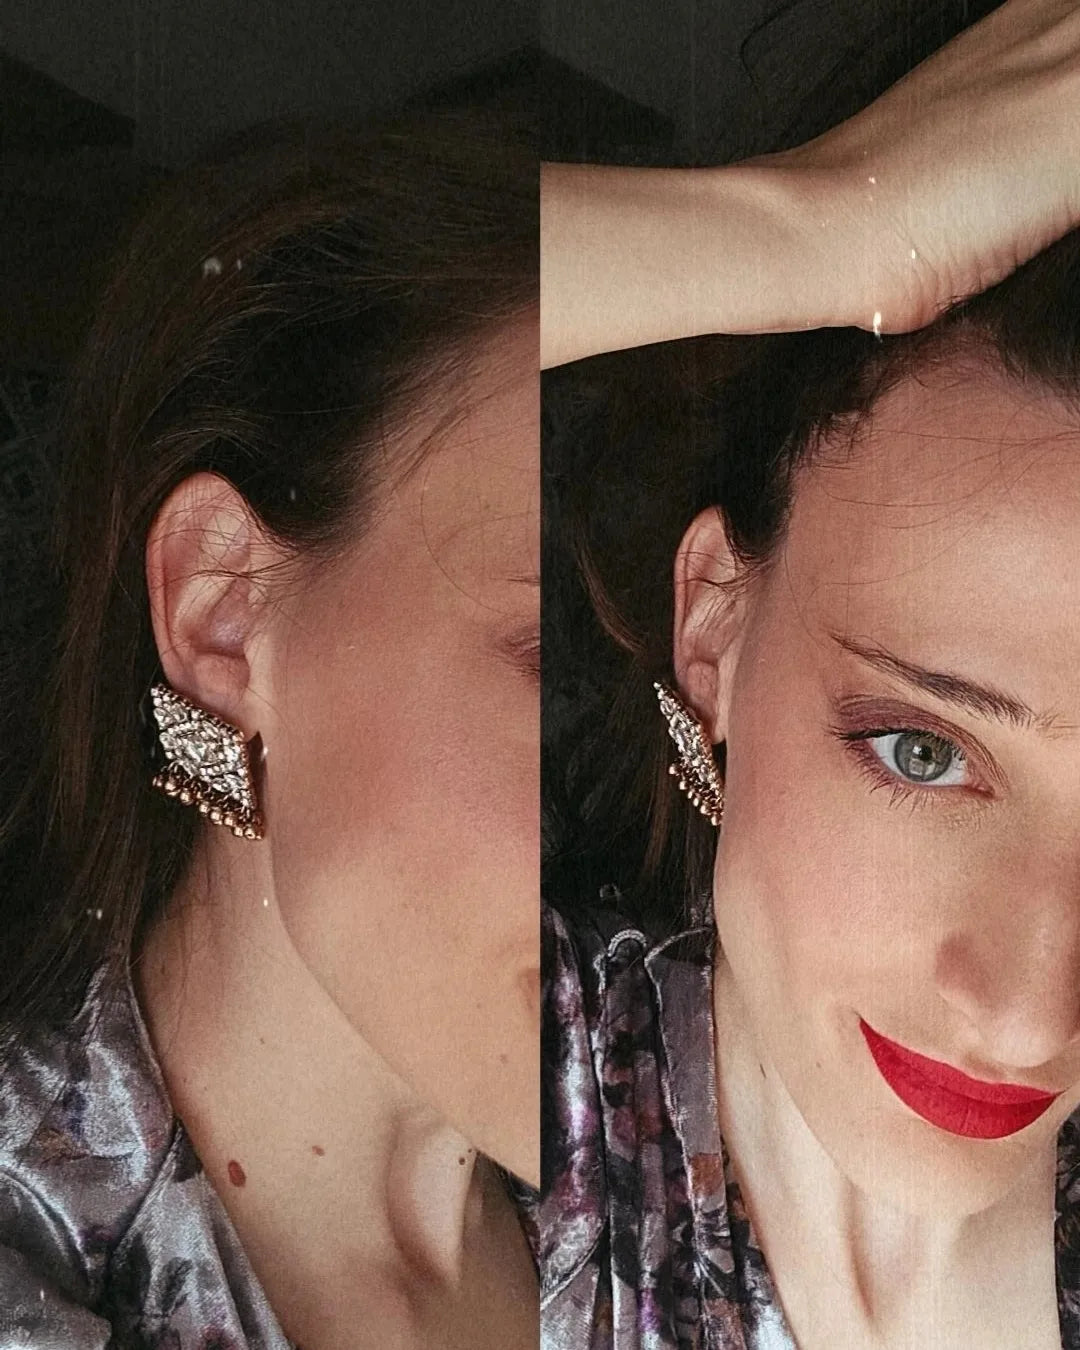 Tiara earrings